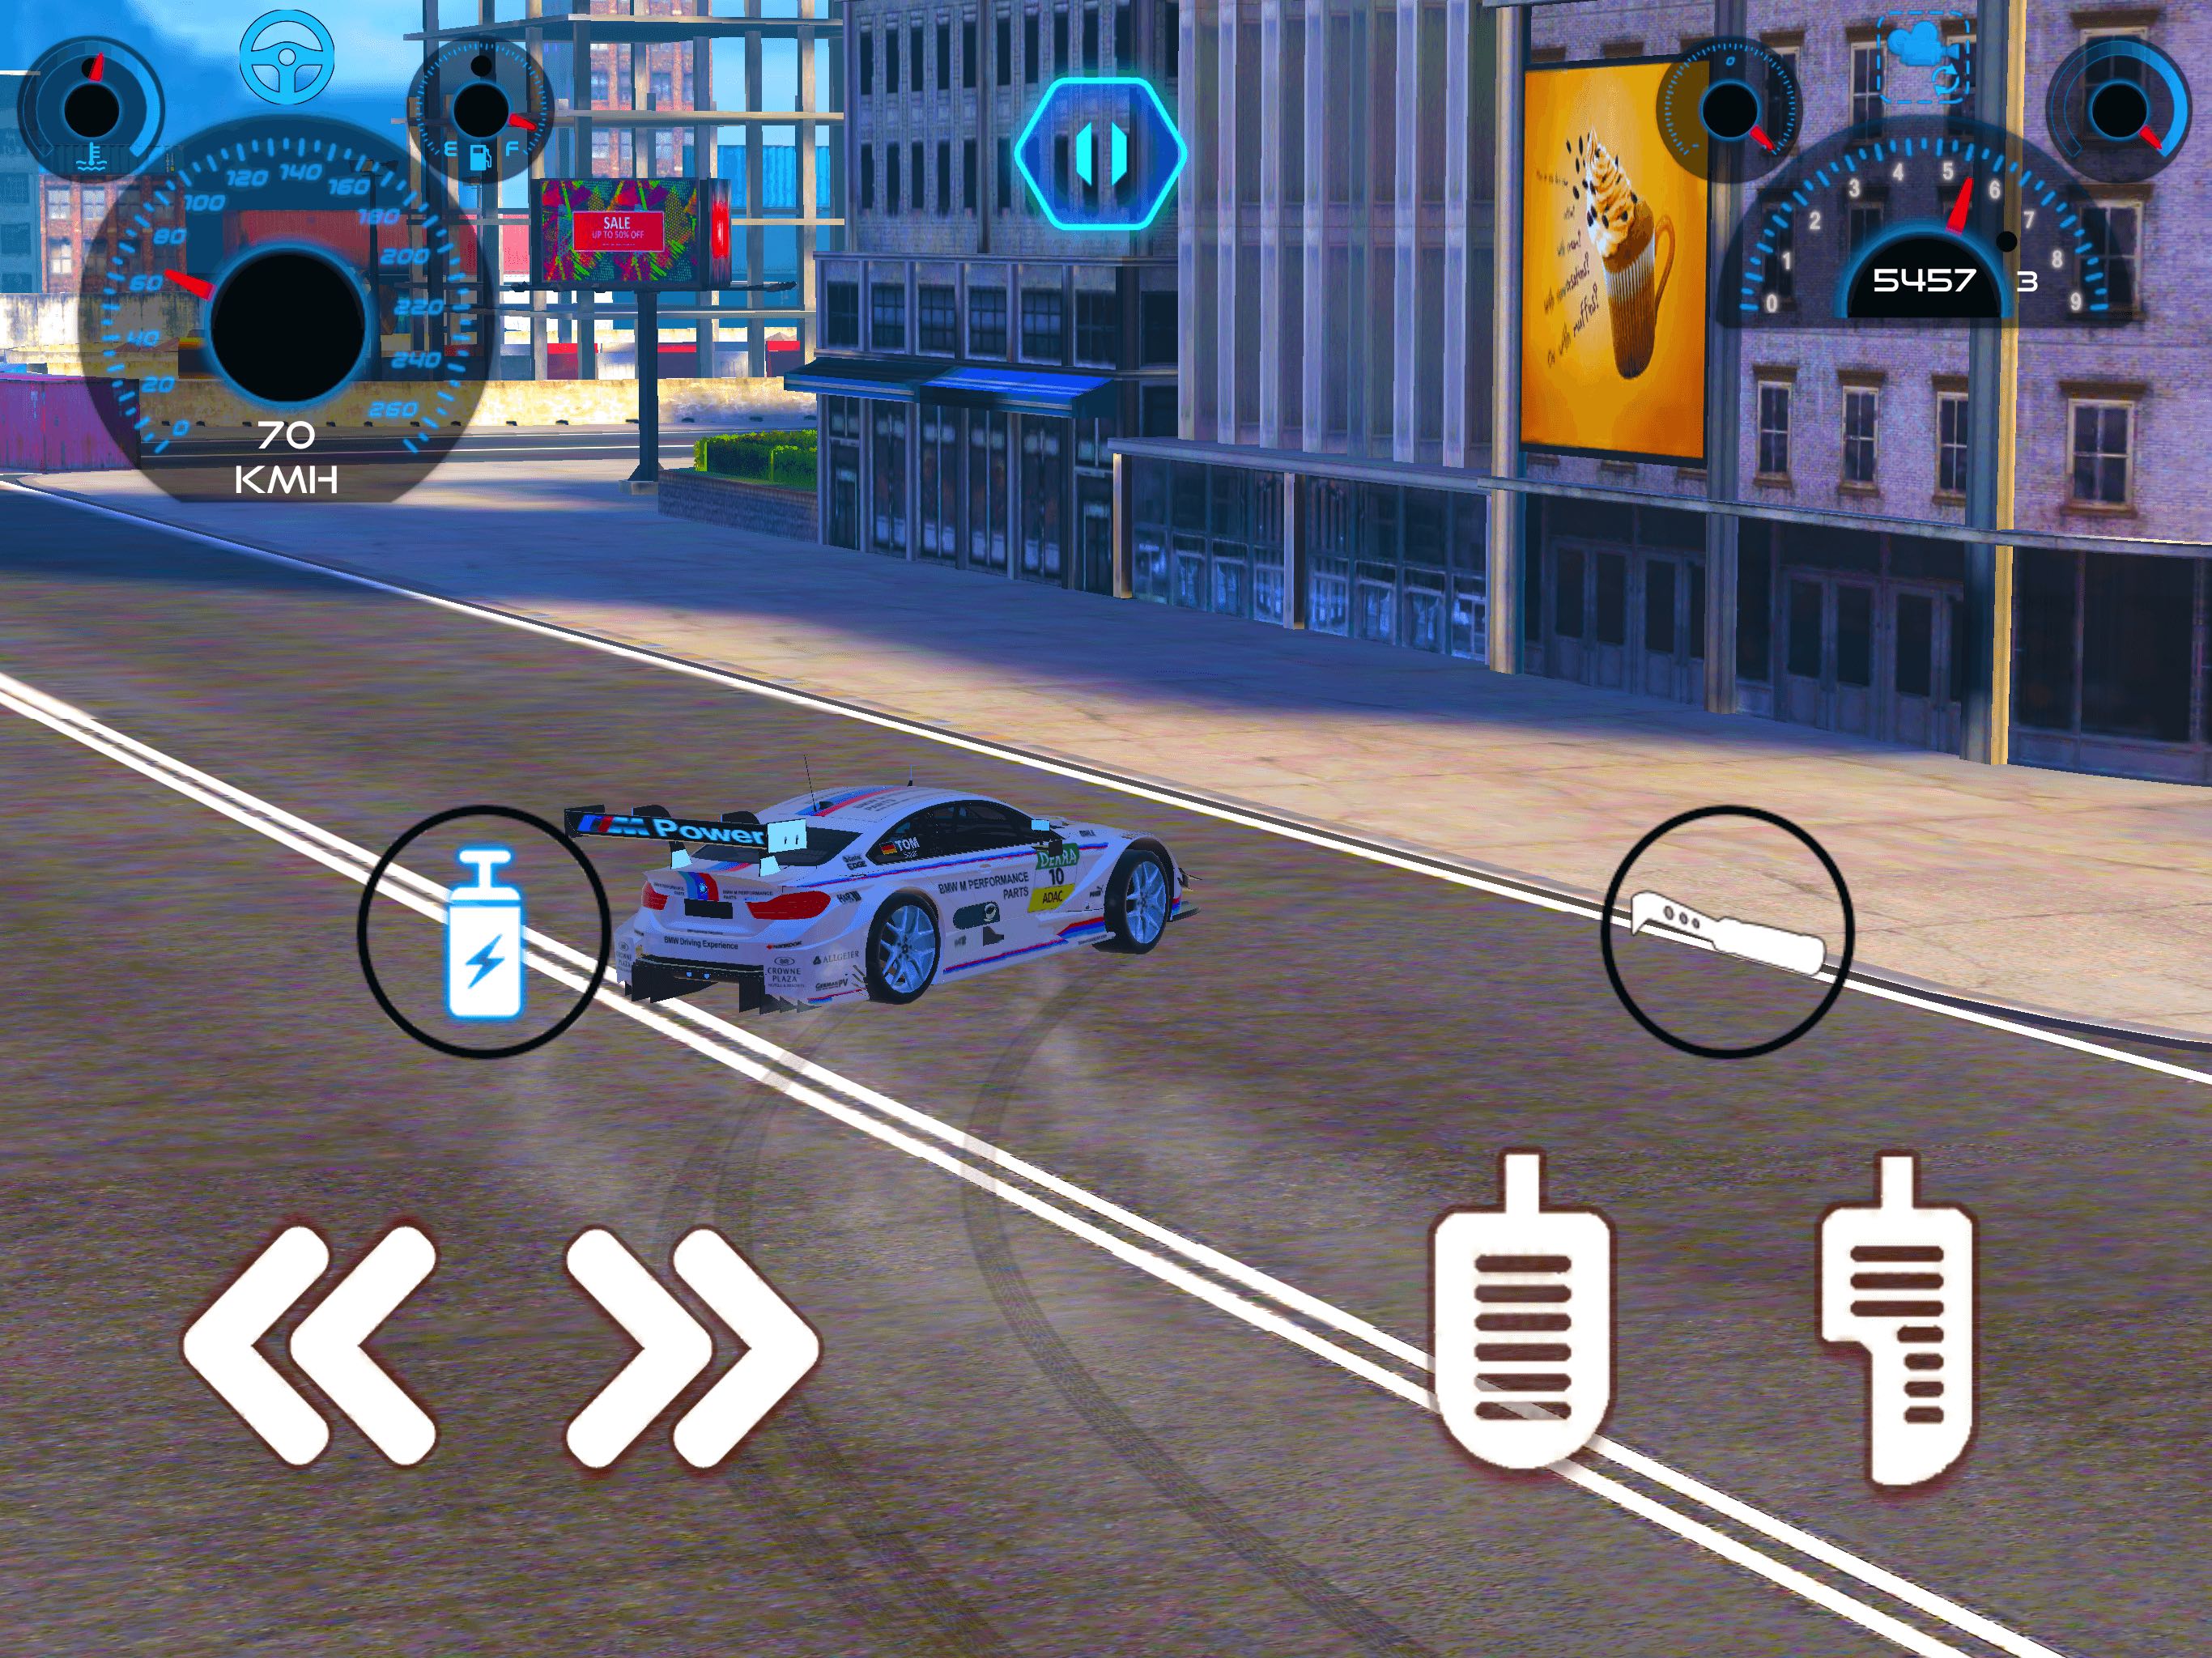 Car Driving - Drift Simulator - Luxury Cars - Realistic Drive Games - 64 Bit Source Code